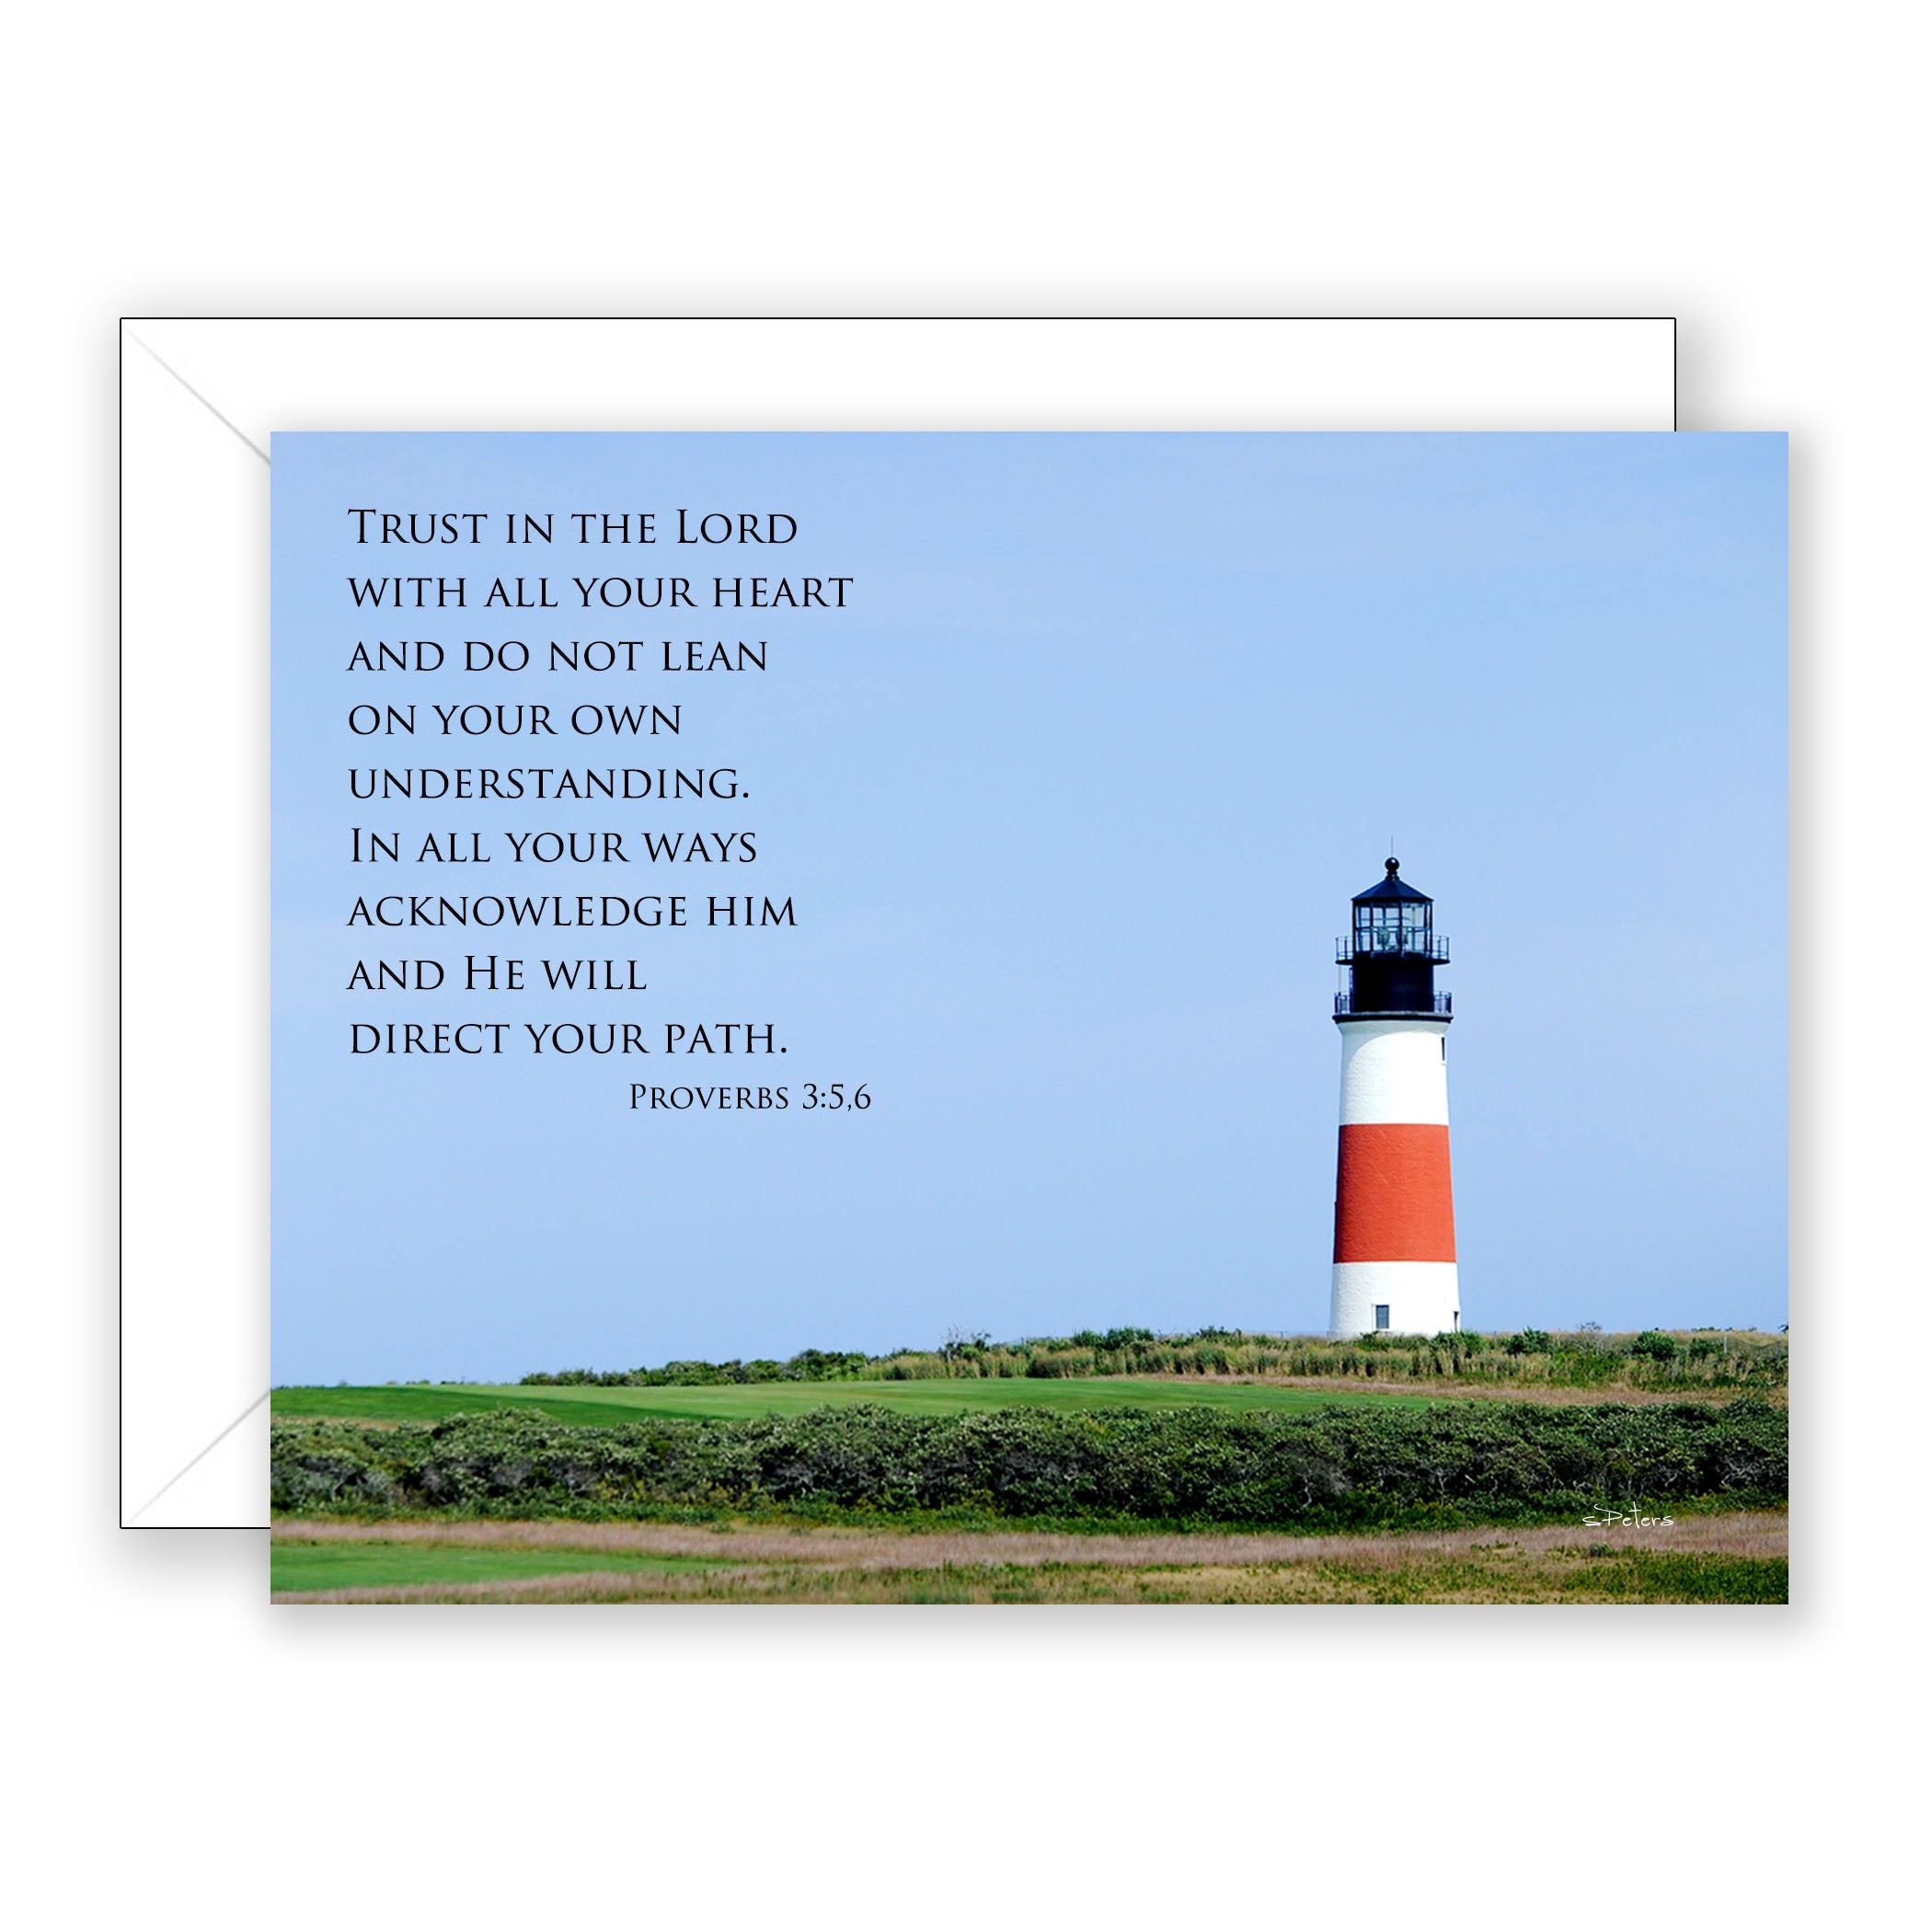 Guiding Light (Proverbs 3:5,6) - Encouragement Card (Blank)